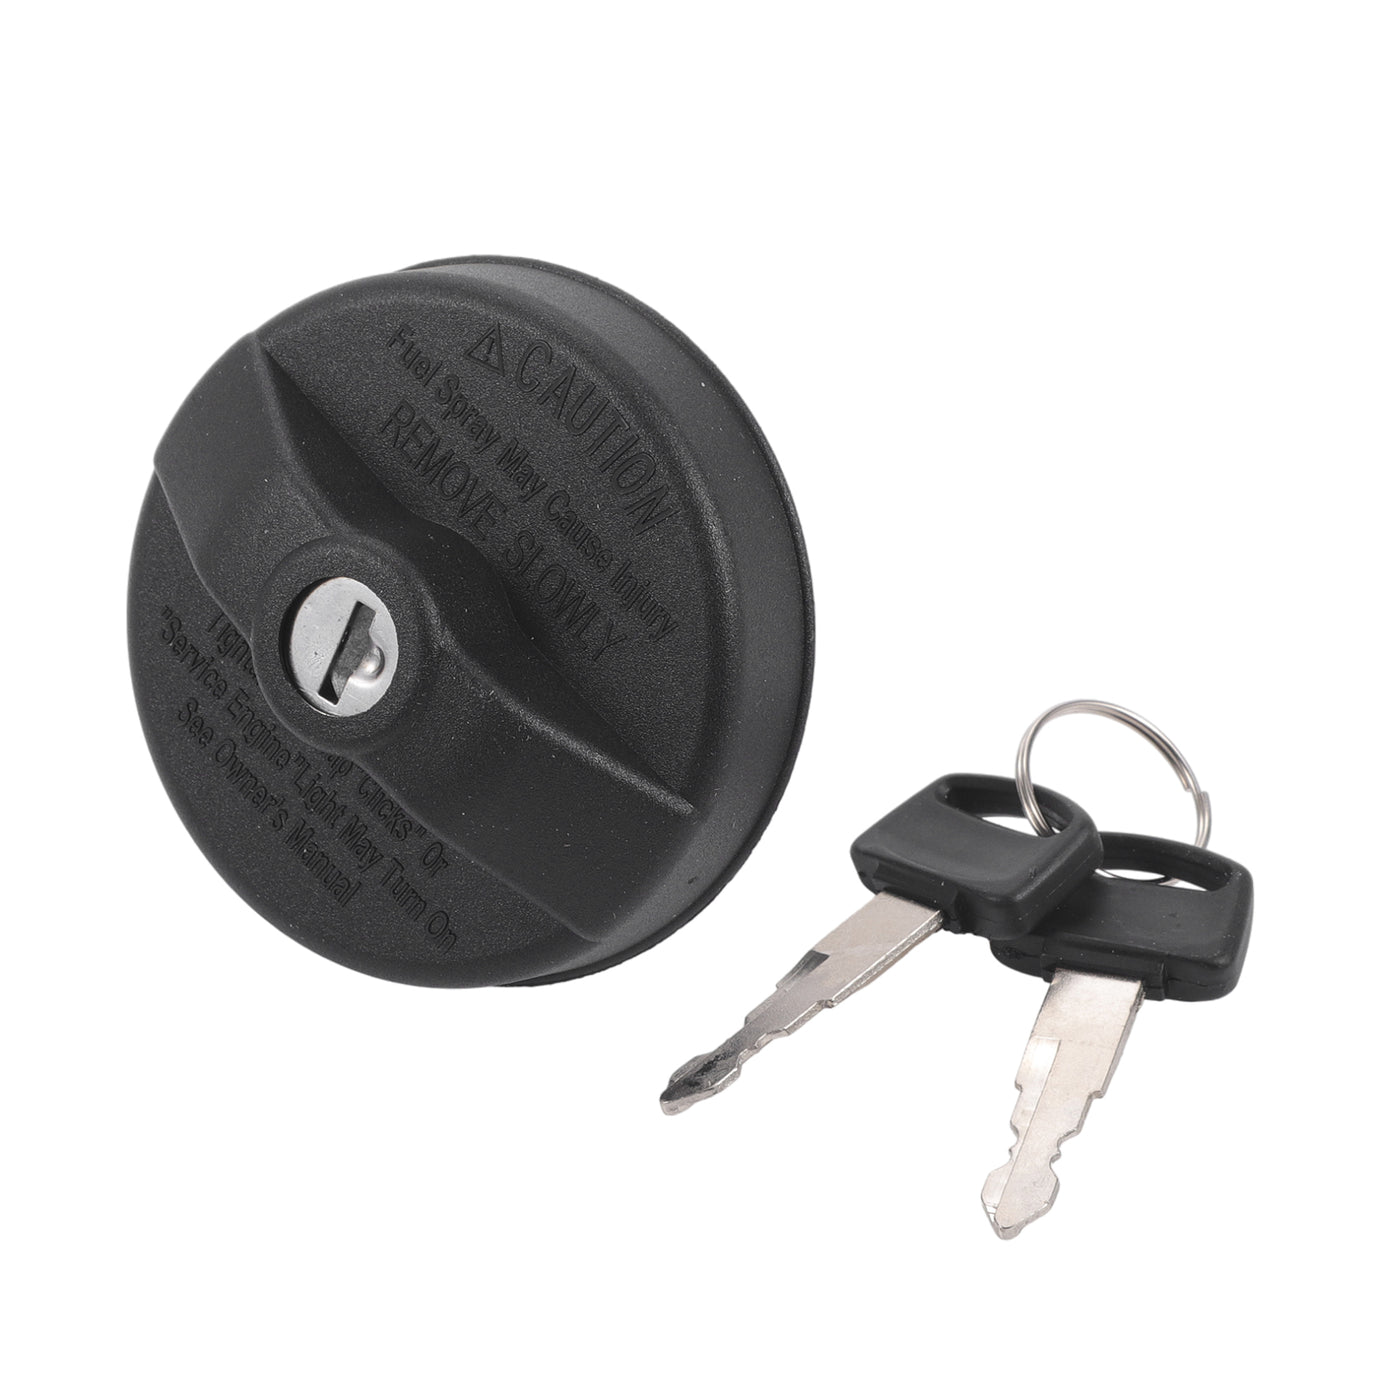 ACROPIX Plastic Locking Gas Cap Lock Fuel Tank Cap Black Fit for Toyota Camry Corolla RAV4 with Keys No.52100239/82202338 - Pack of 3